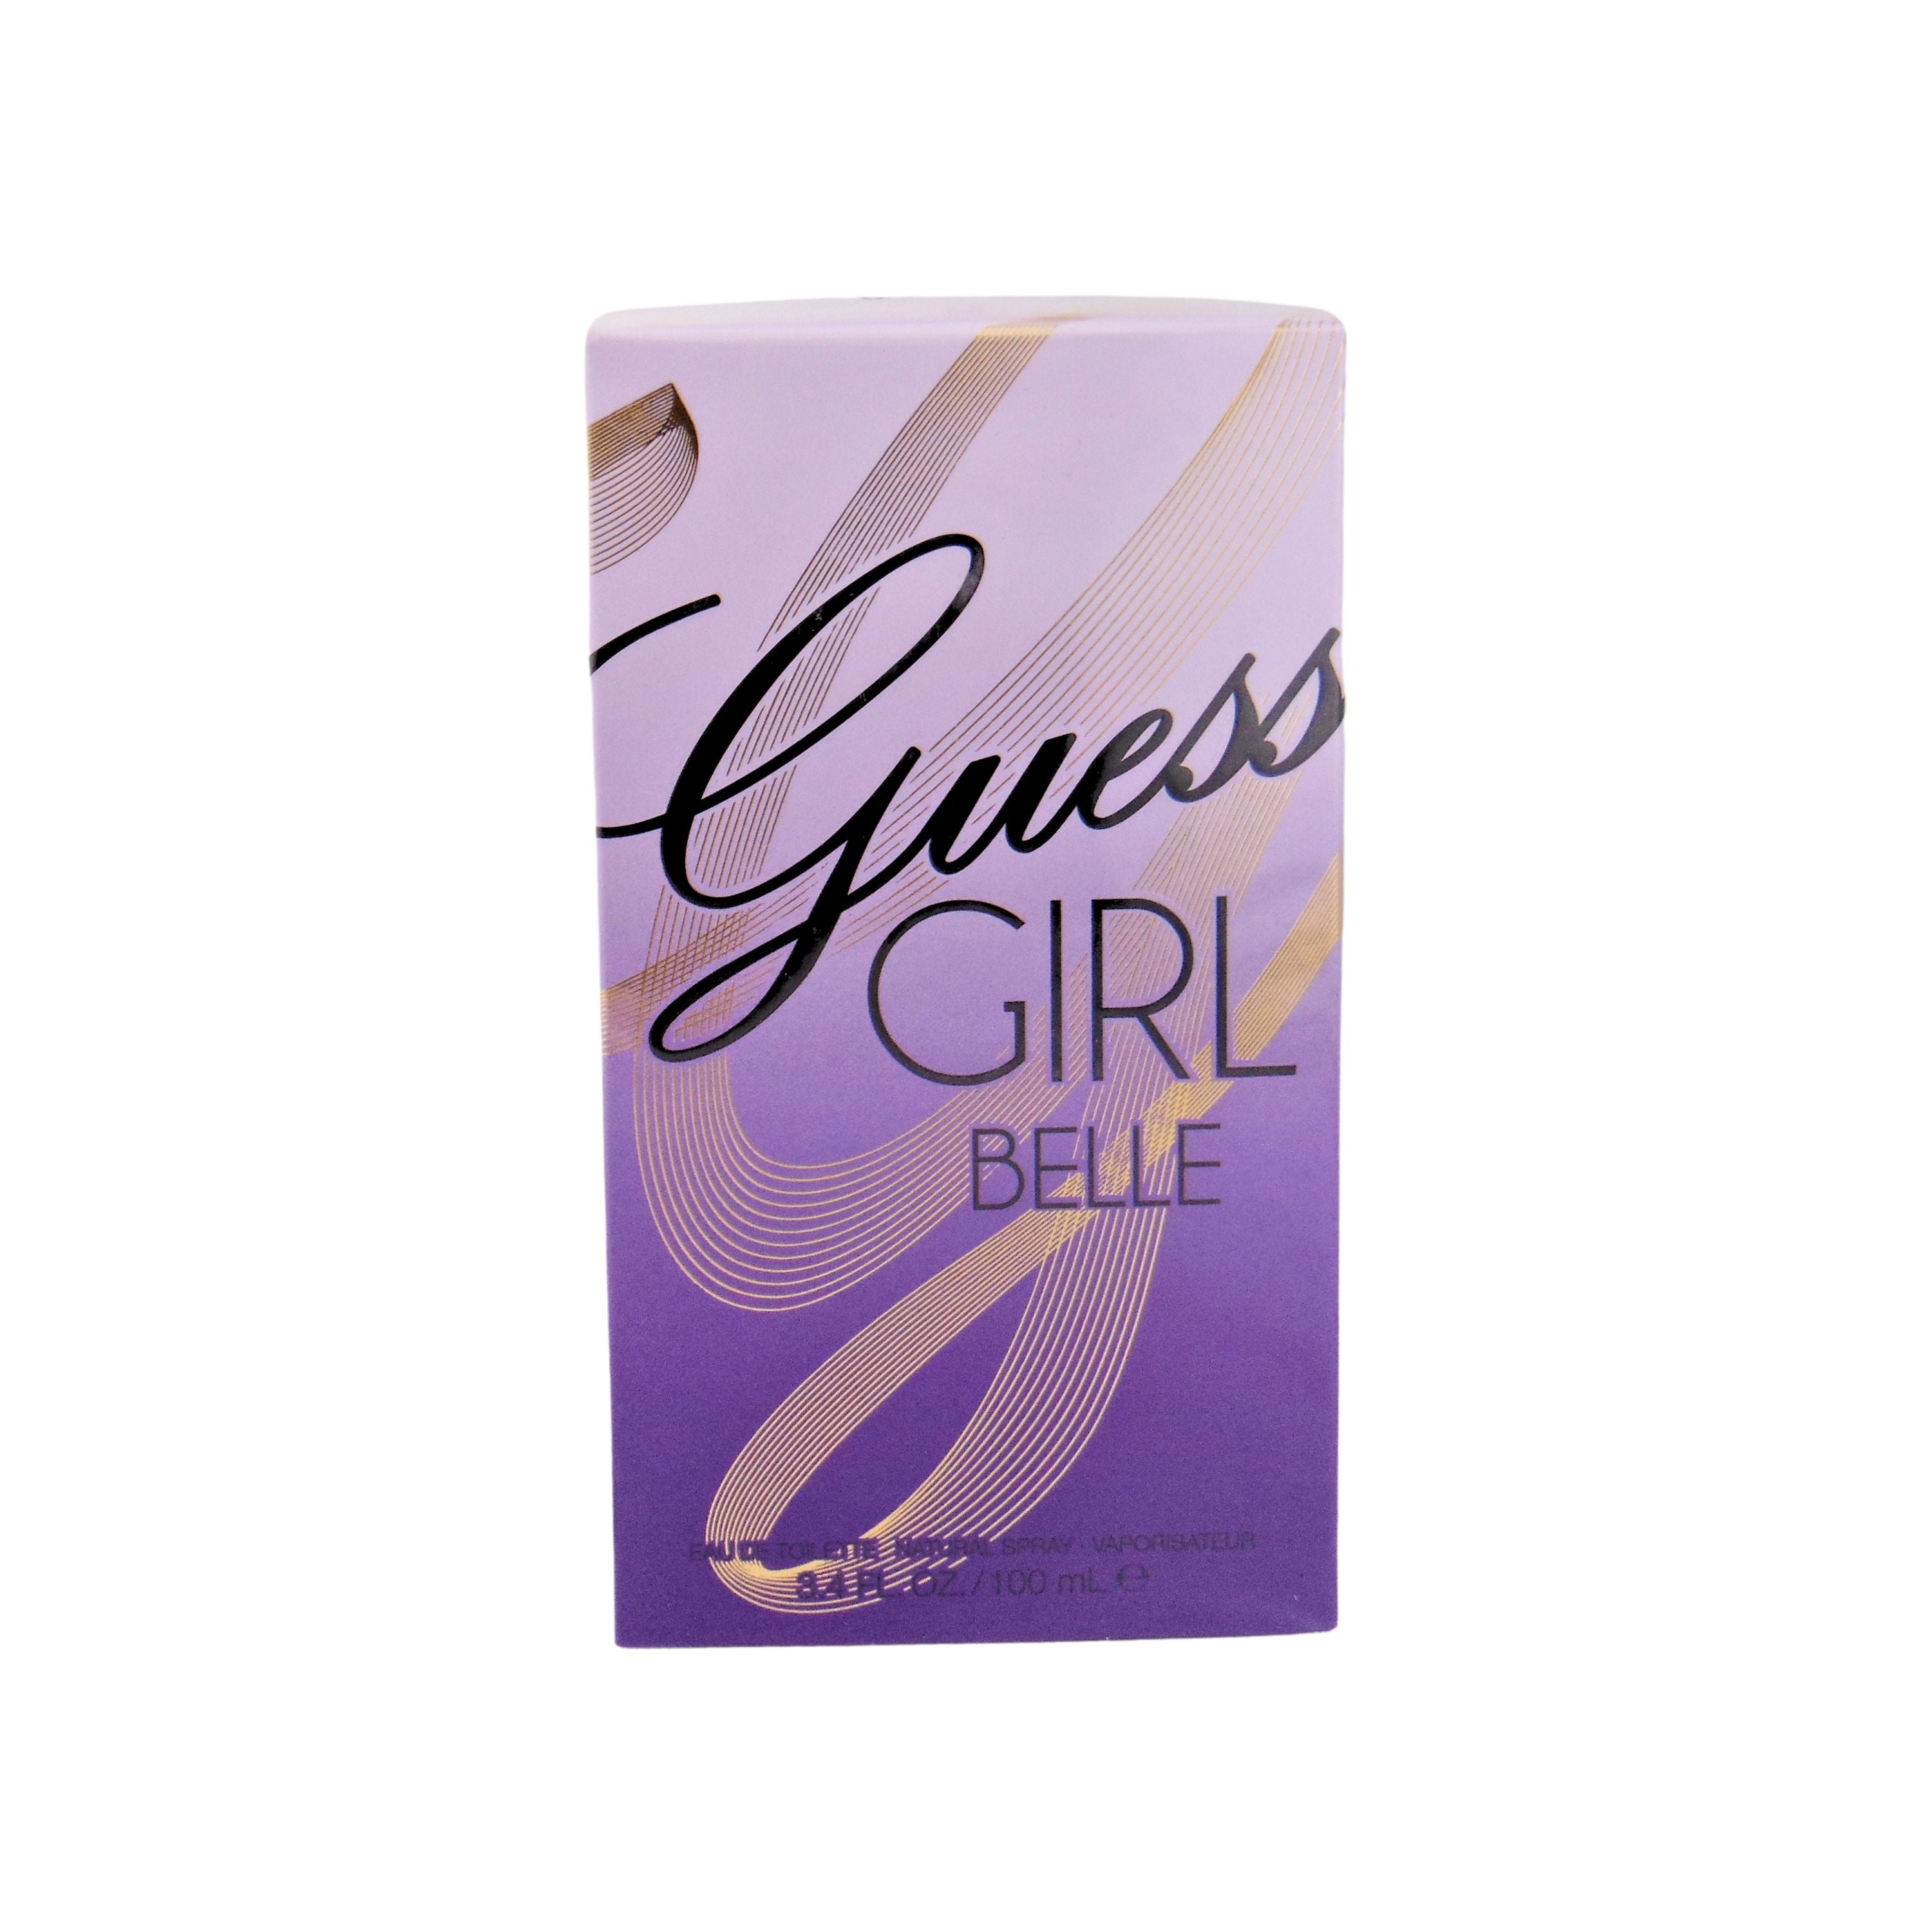 Guess Guess Girl Belle Eau de Toilette for Women